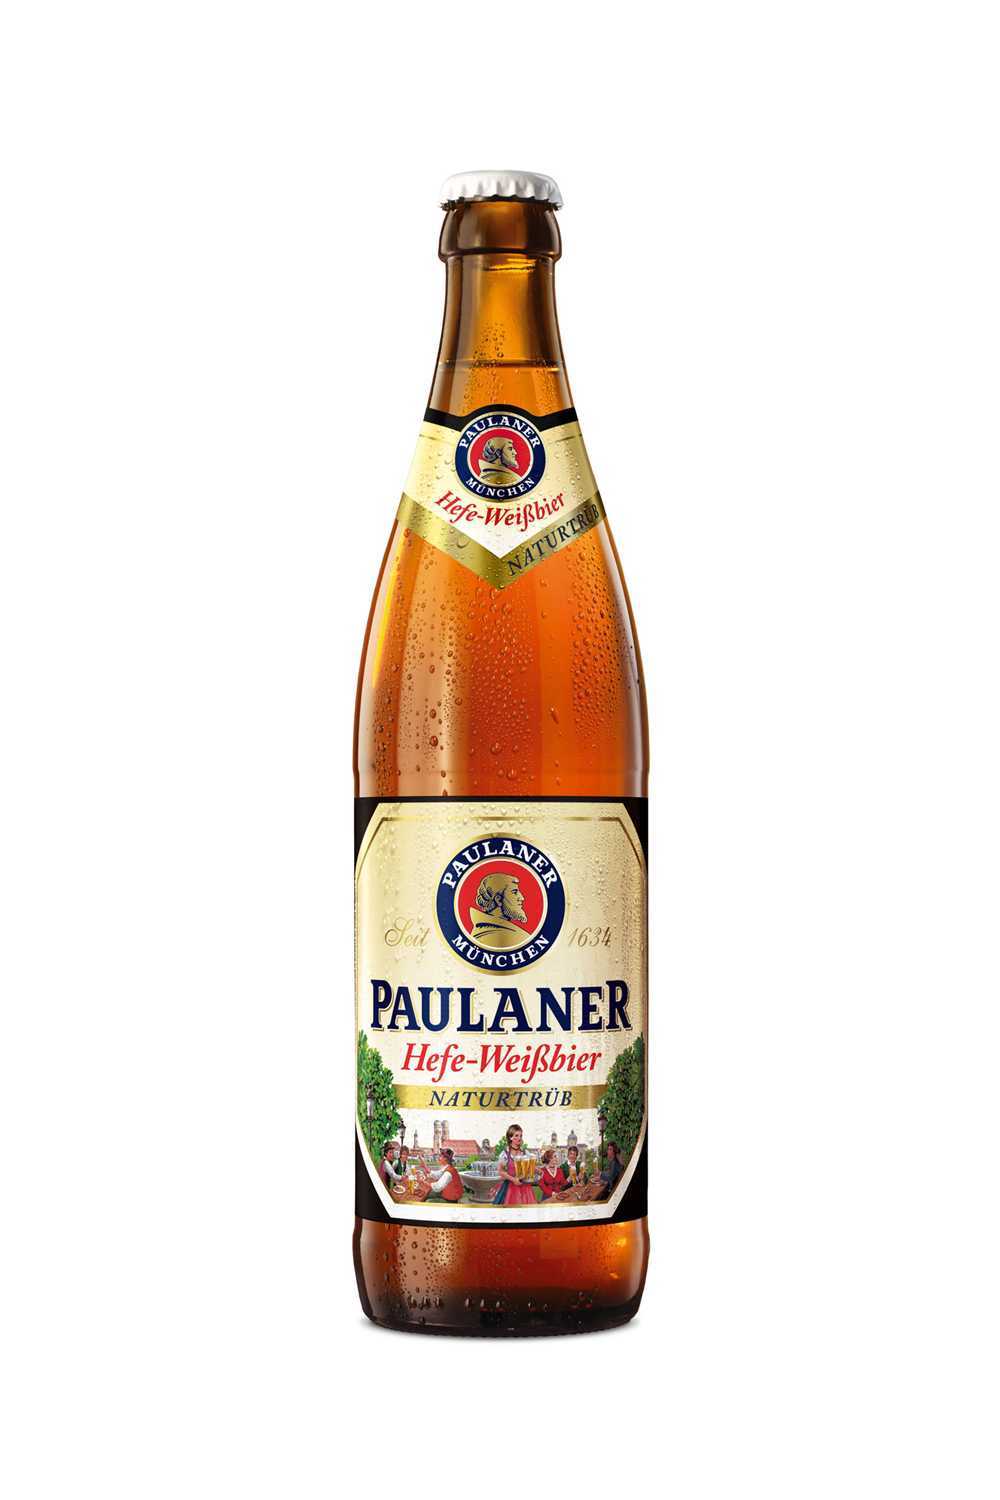 Пиво Паулайнер Хефе Вайсбир н/ф 5,5% с/т 0,5 л (Германия)